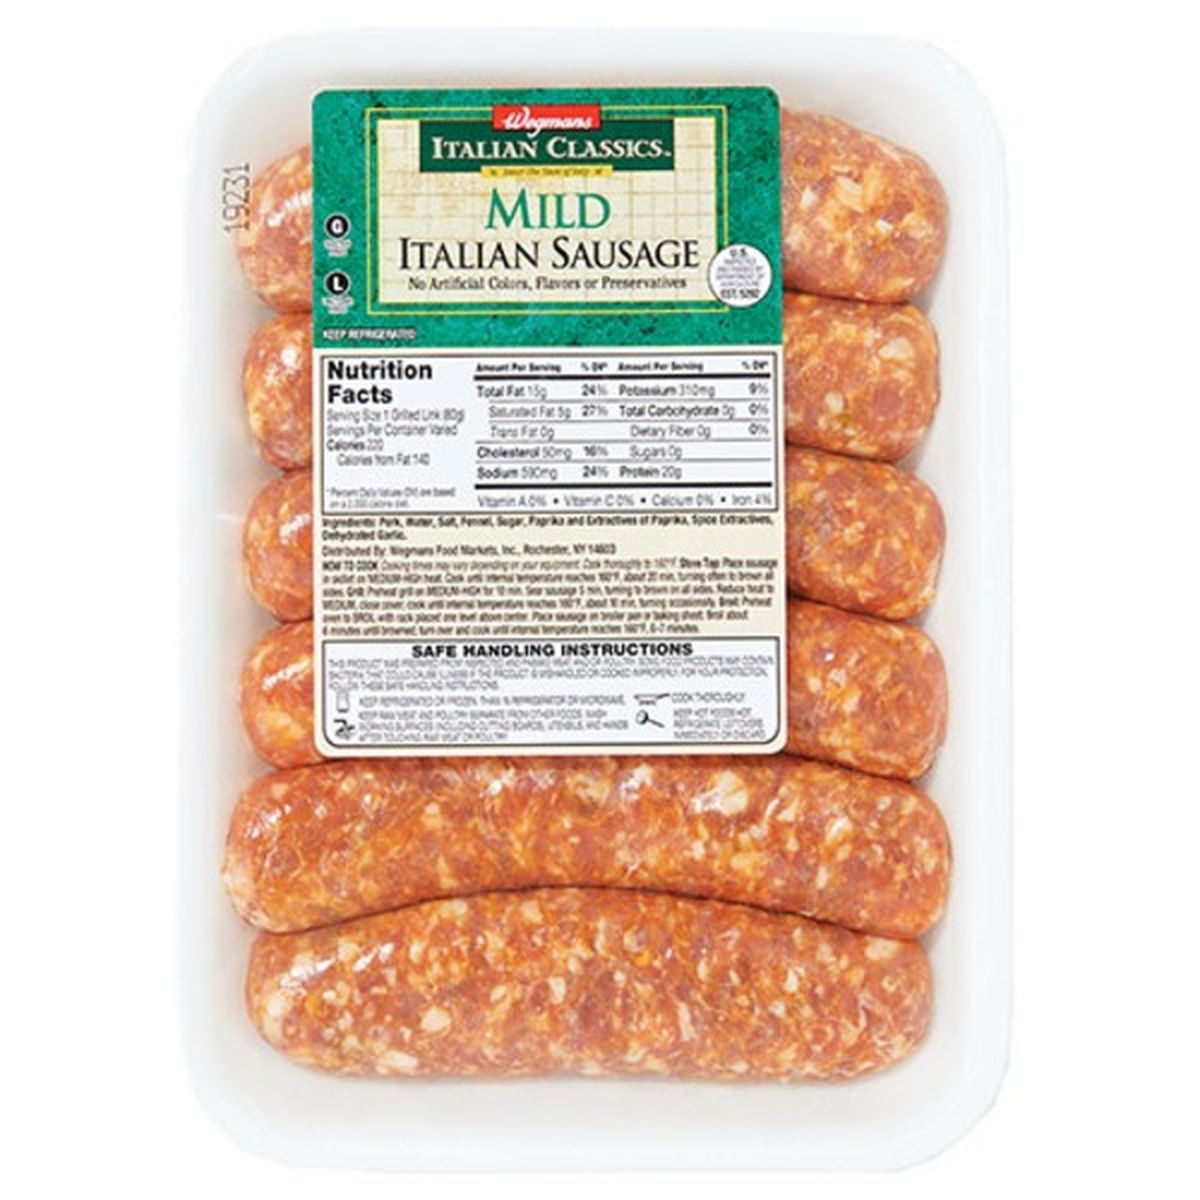 Calories in Wegmans Italian Classics Mild Italian Sausage